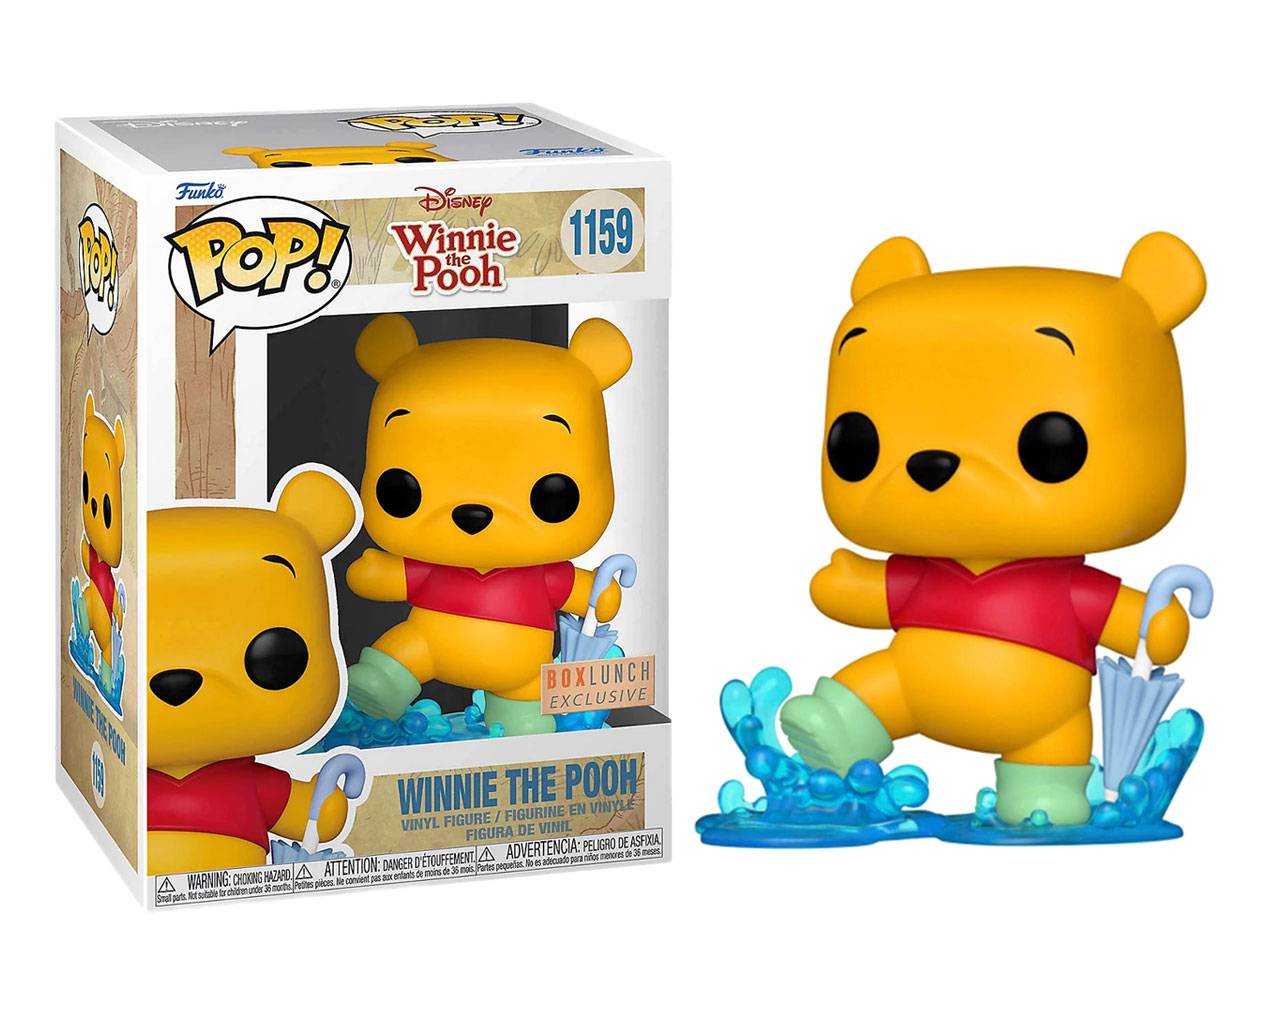 Winnie the Pooh (Rainy Day Pooh) Pop! Vinyl